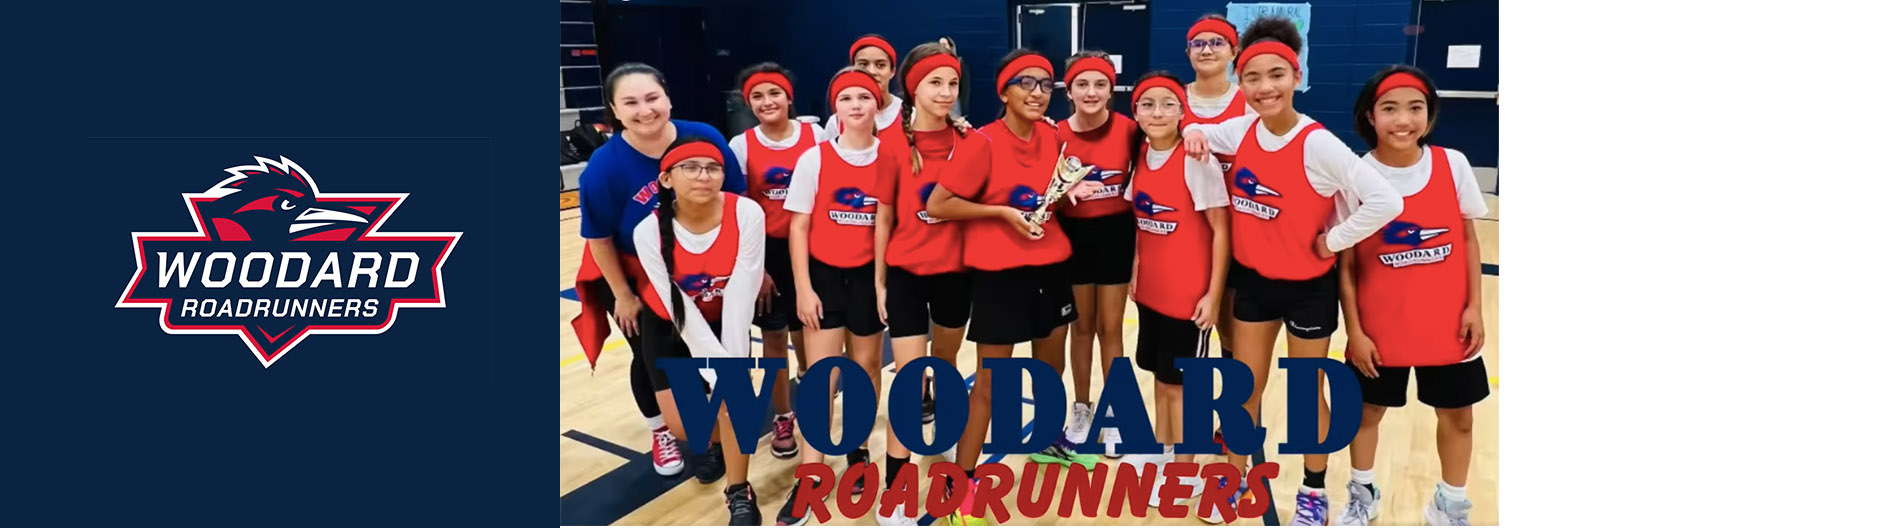 Woodard Roadrunners - girls athletic team holding a trophy in the school gym